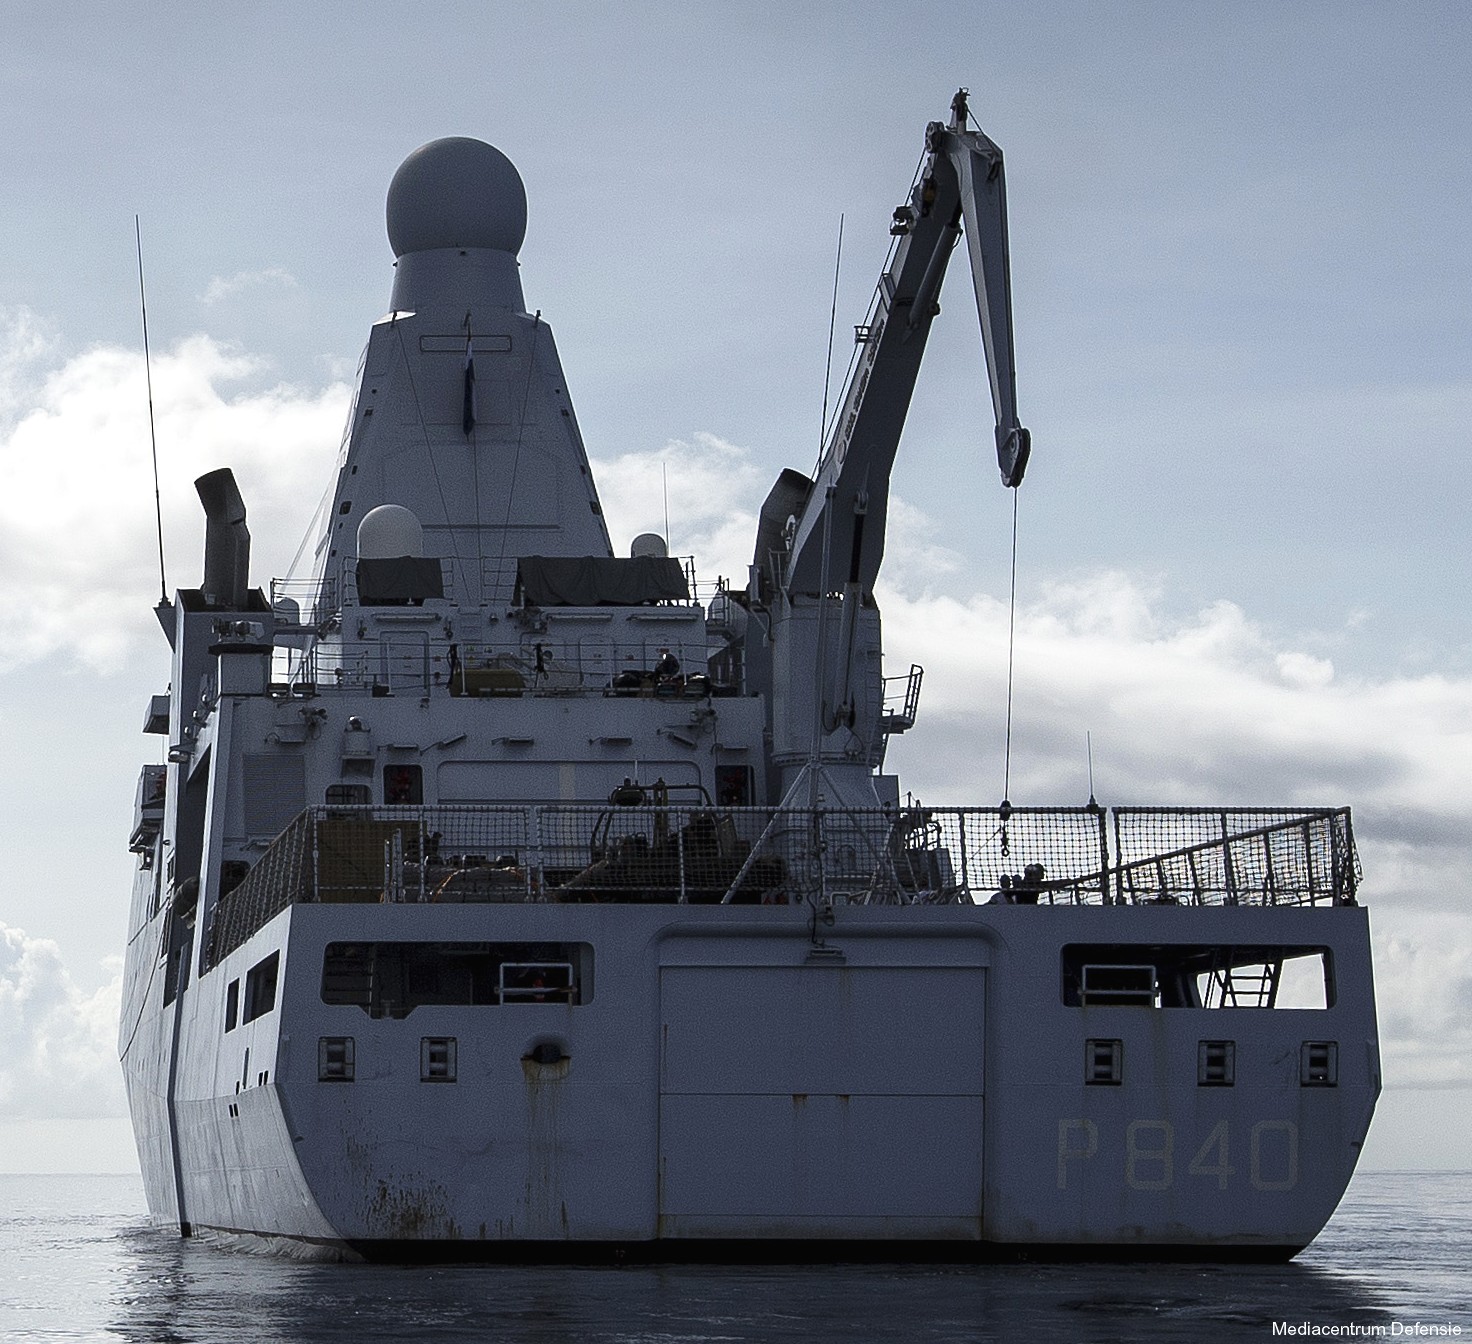 p-840 hnlms holland offshore patrol vessel opv royal netherlands navy 07